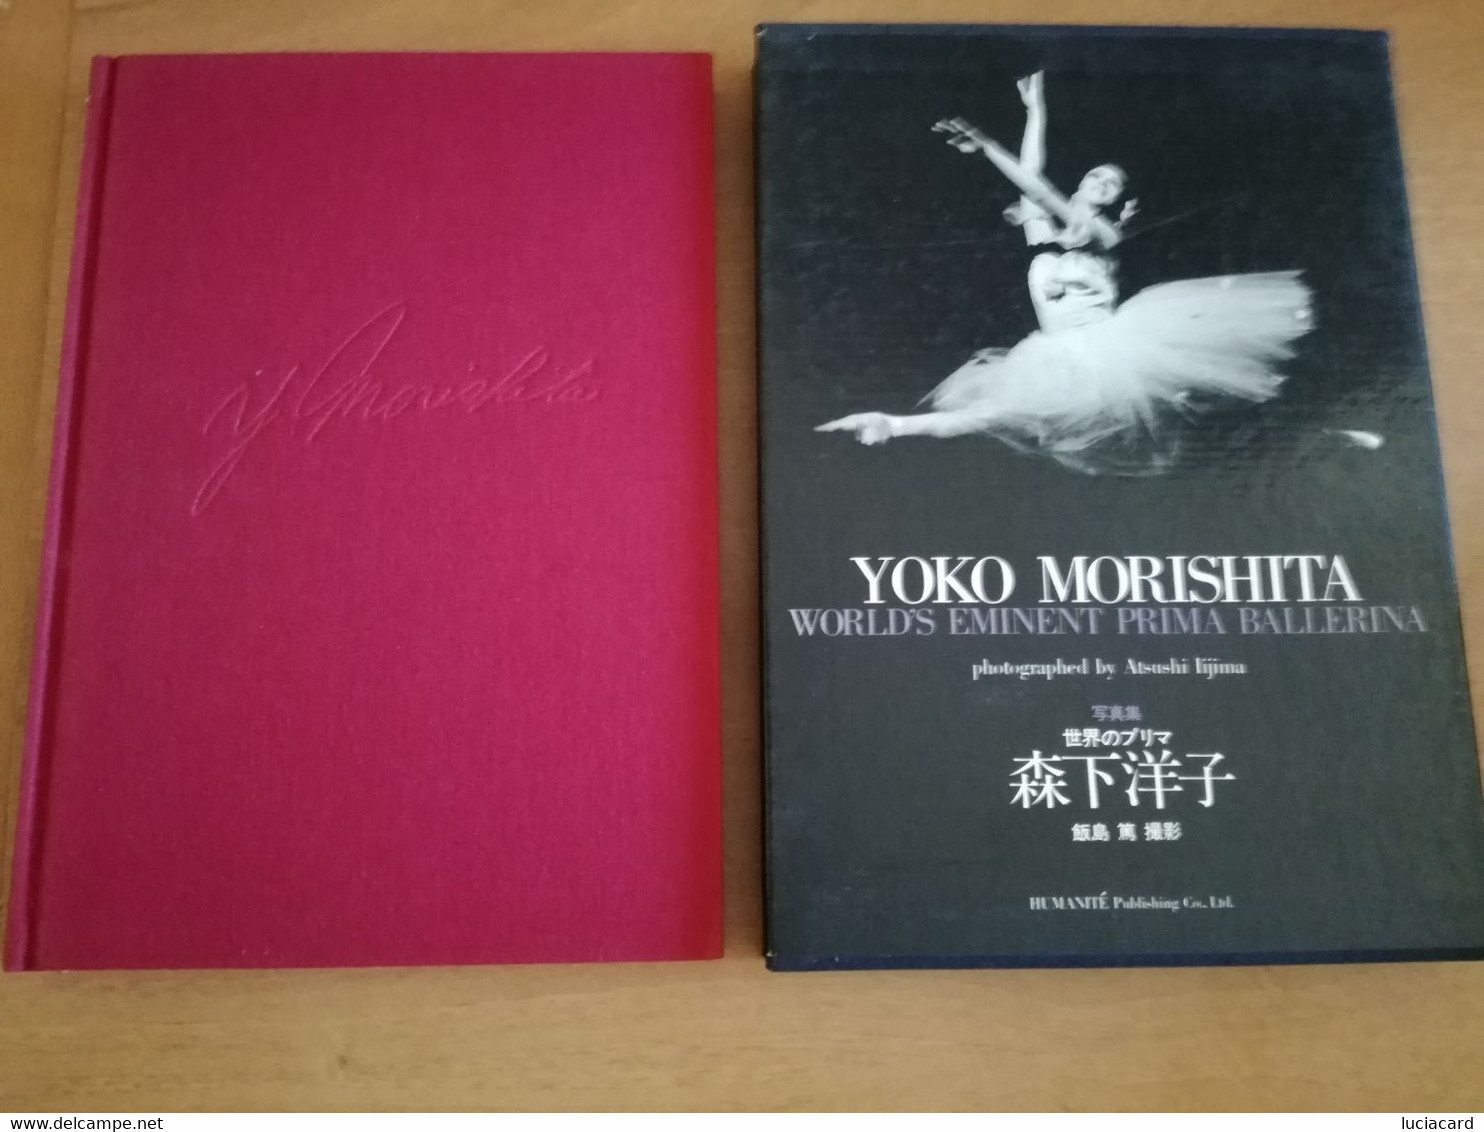 YOKO MORISHITA WORLD'S EMINENT -PRIMA BALLERINA -PHOTO GRAPHED ARSUSHI LISIMA - Musique